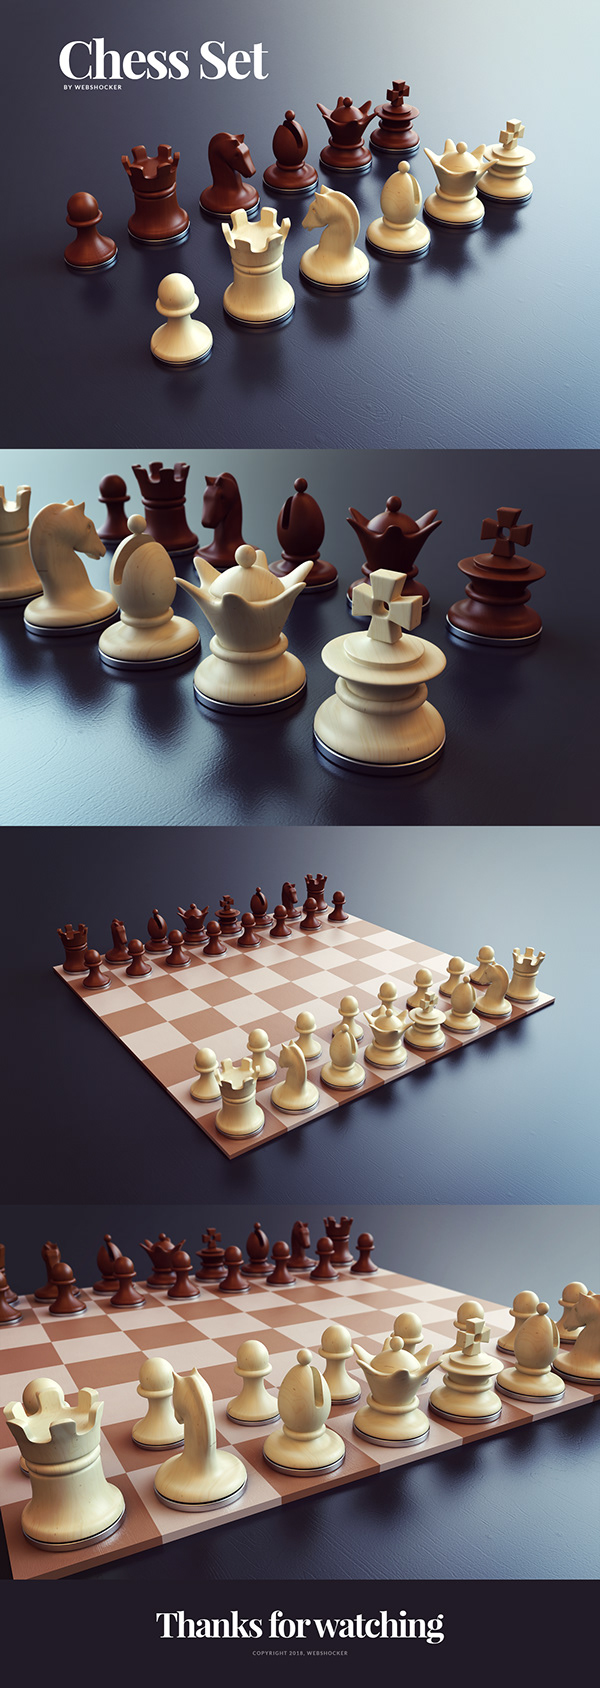 Chess Set by Webshocker